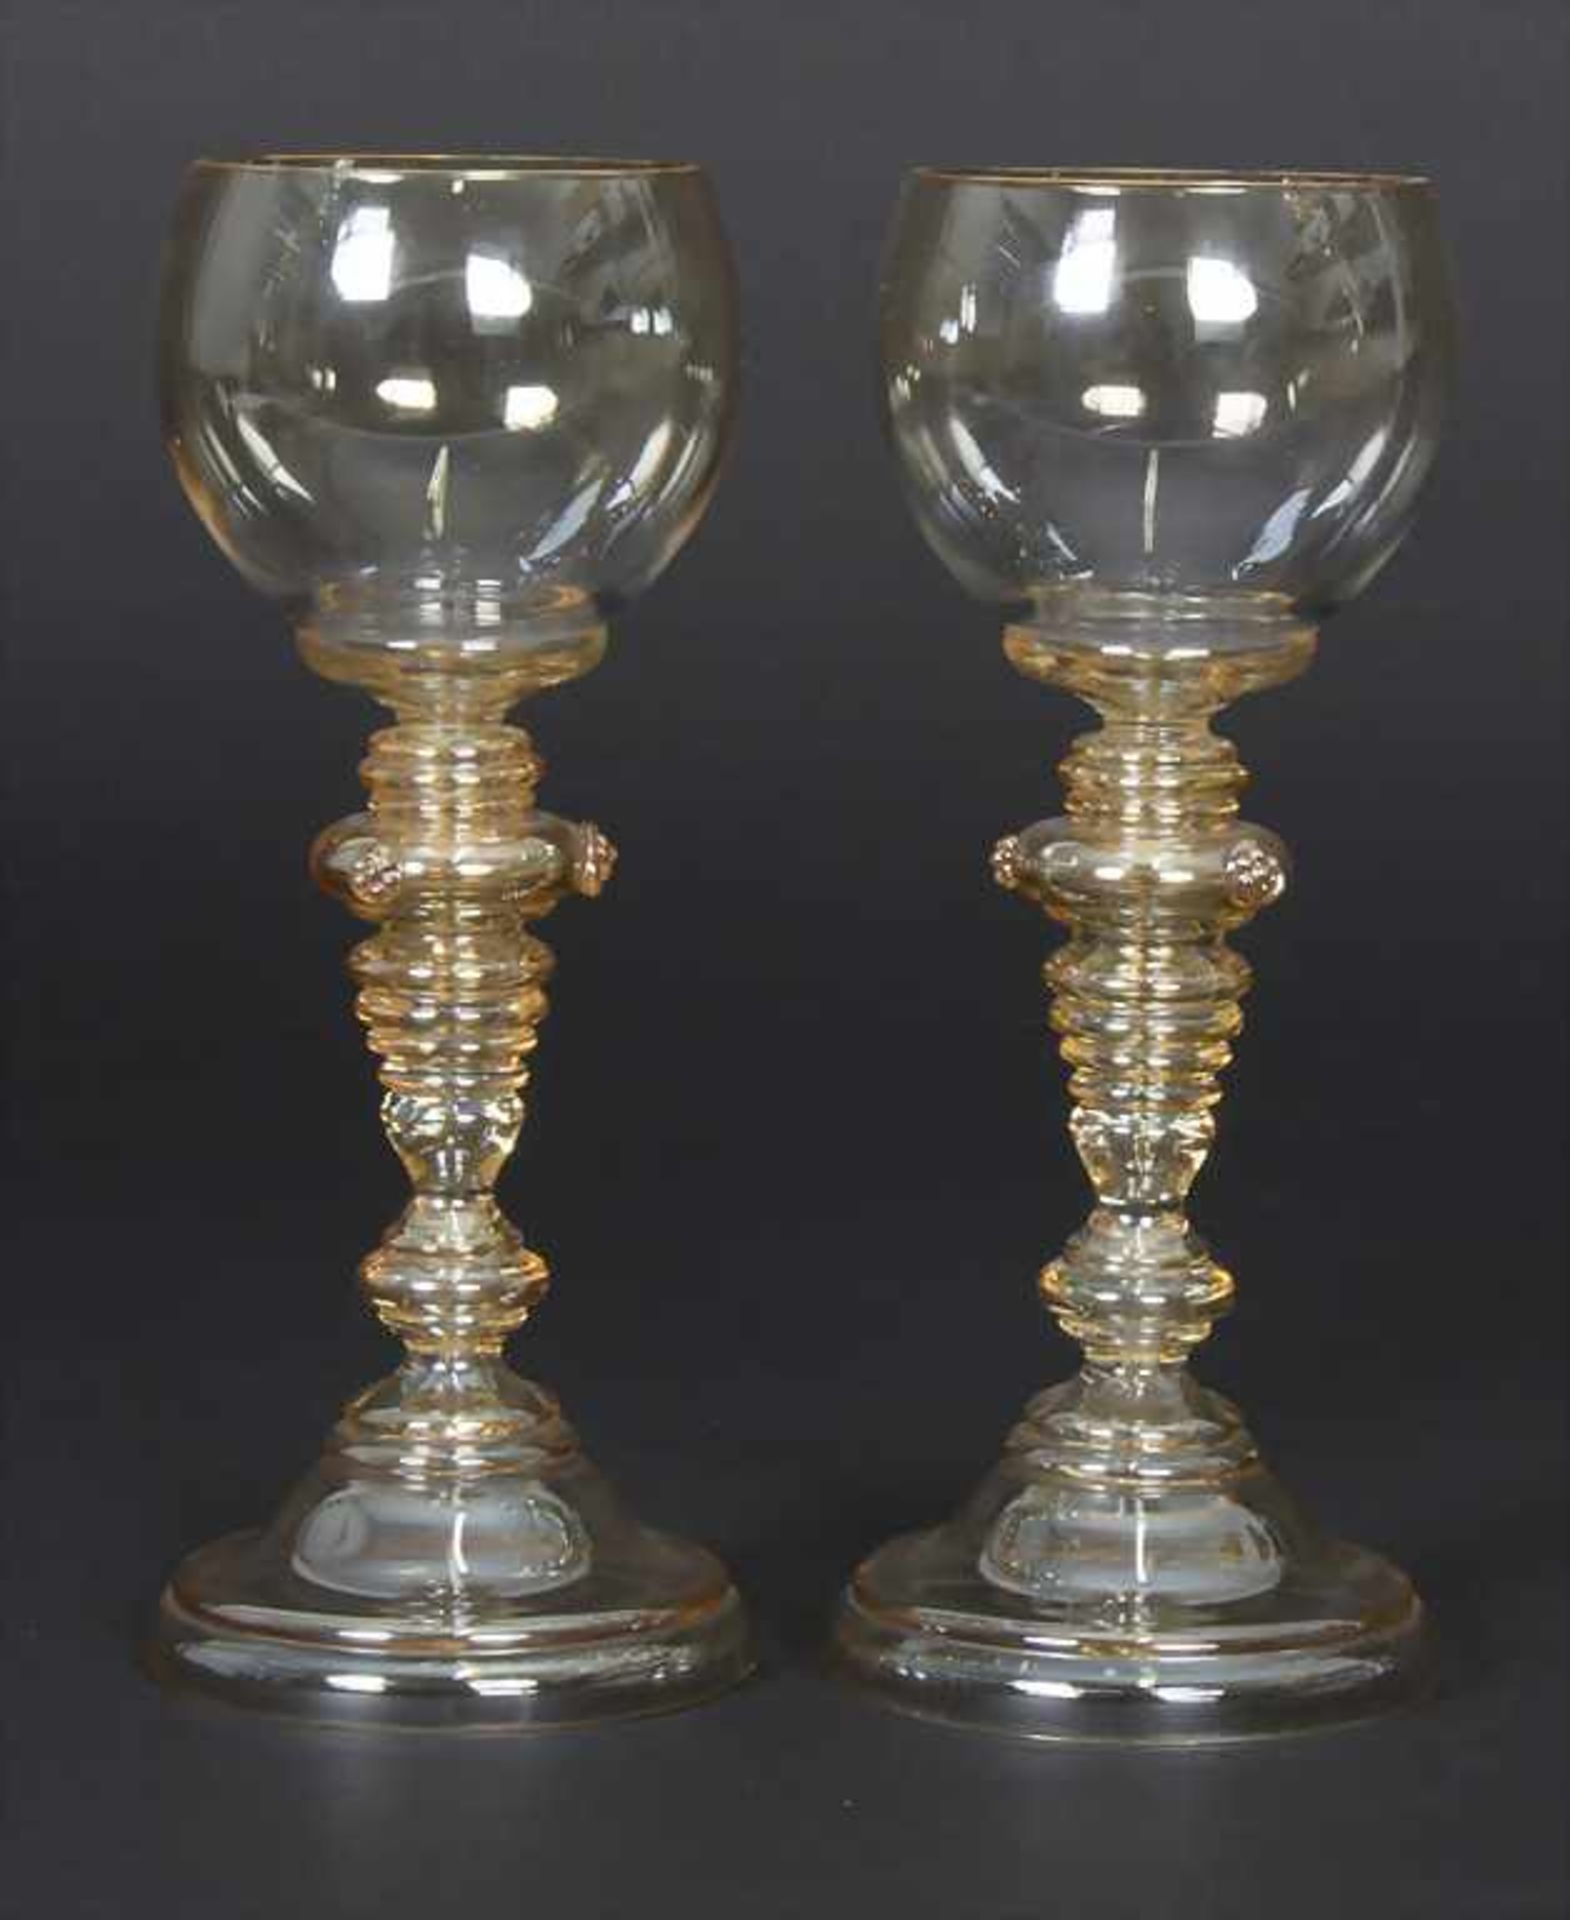 2 Weingläser / 2 wine glasses, Theresienthal, um 1920Material: Kristallglas bernsteinfarben,